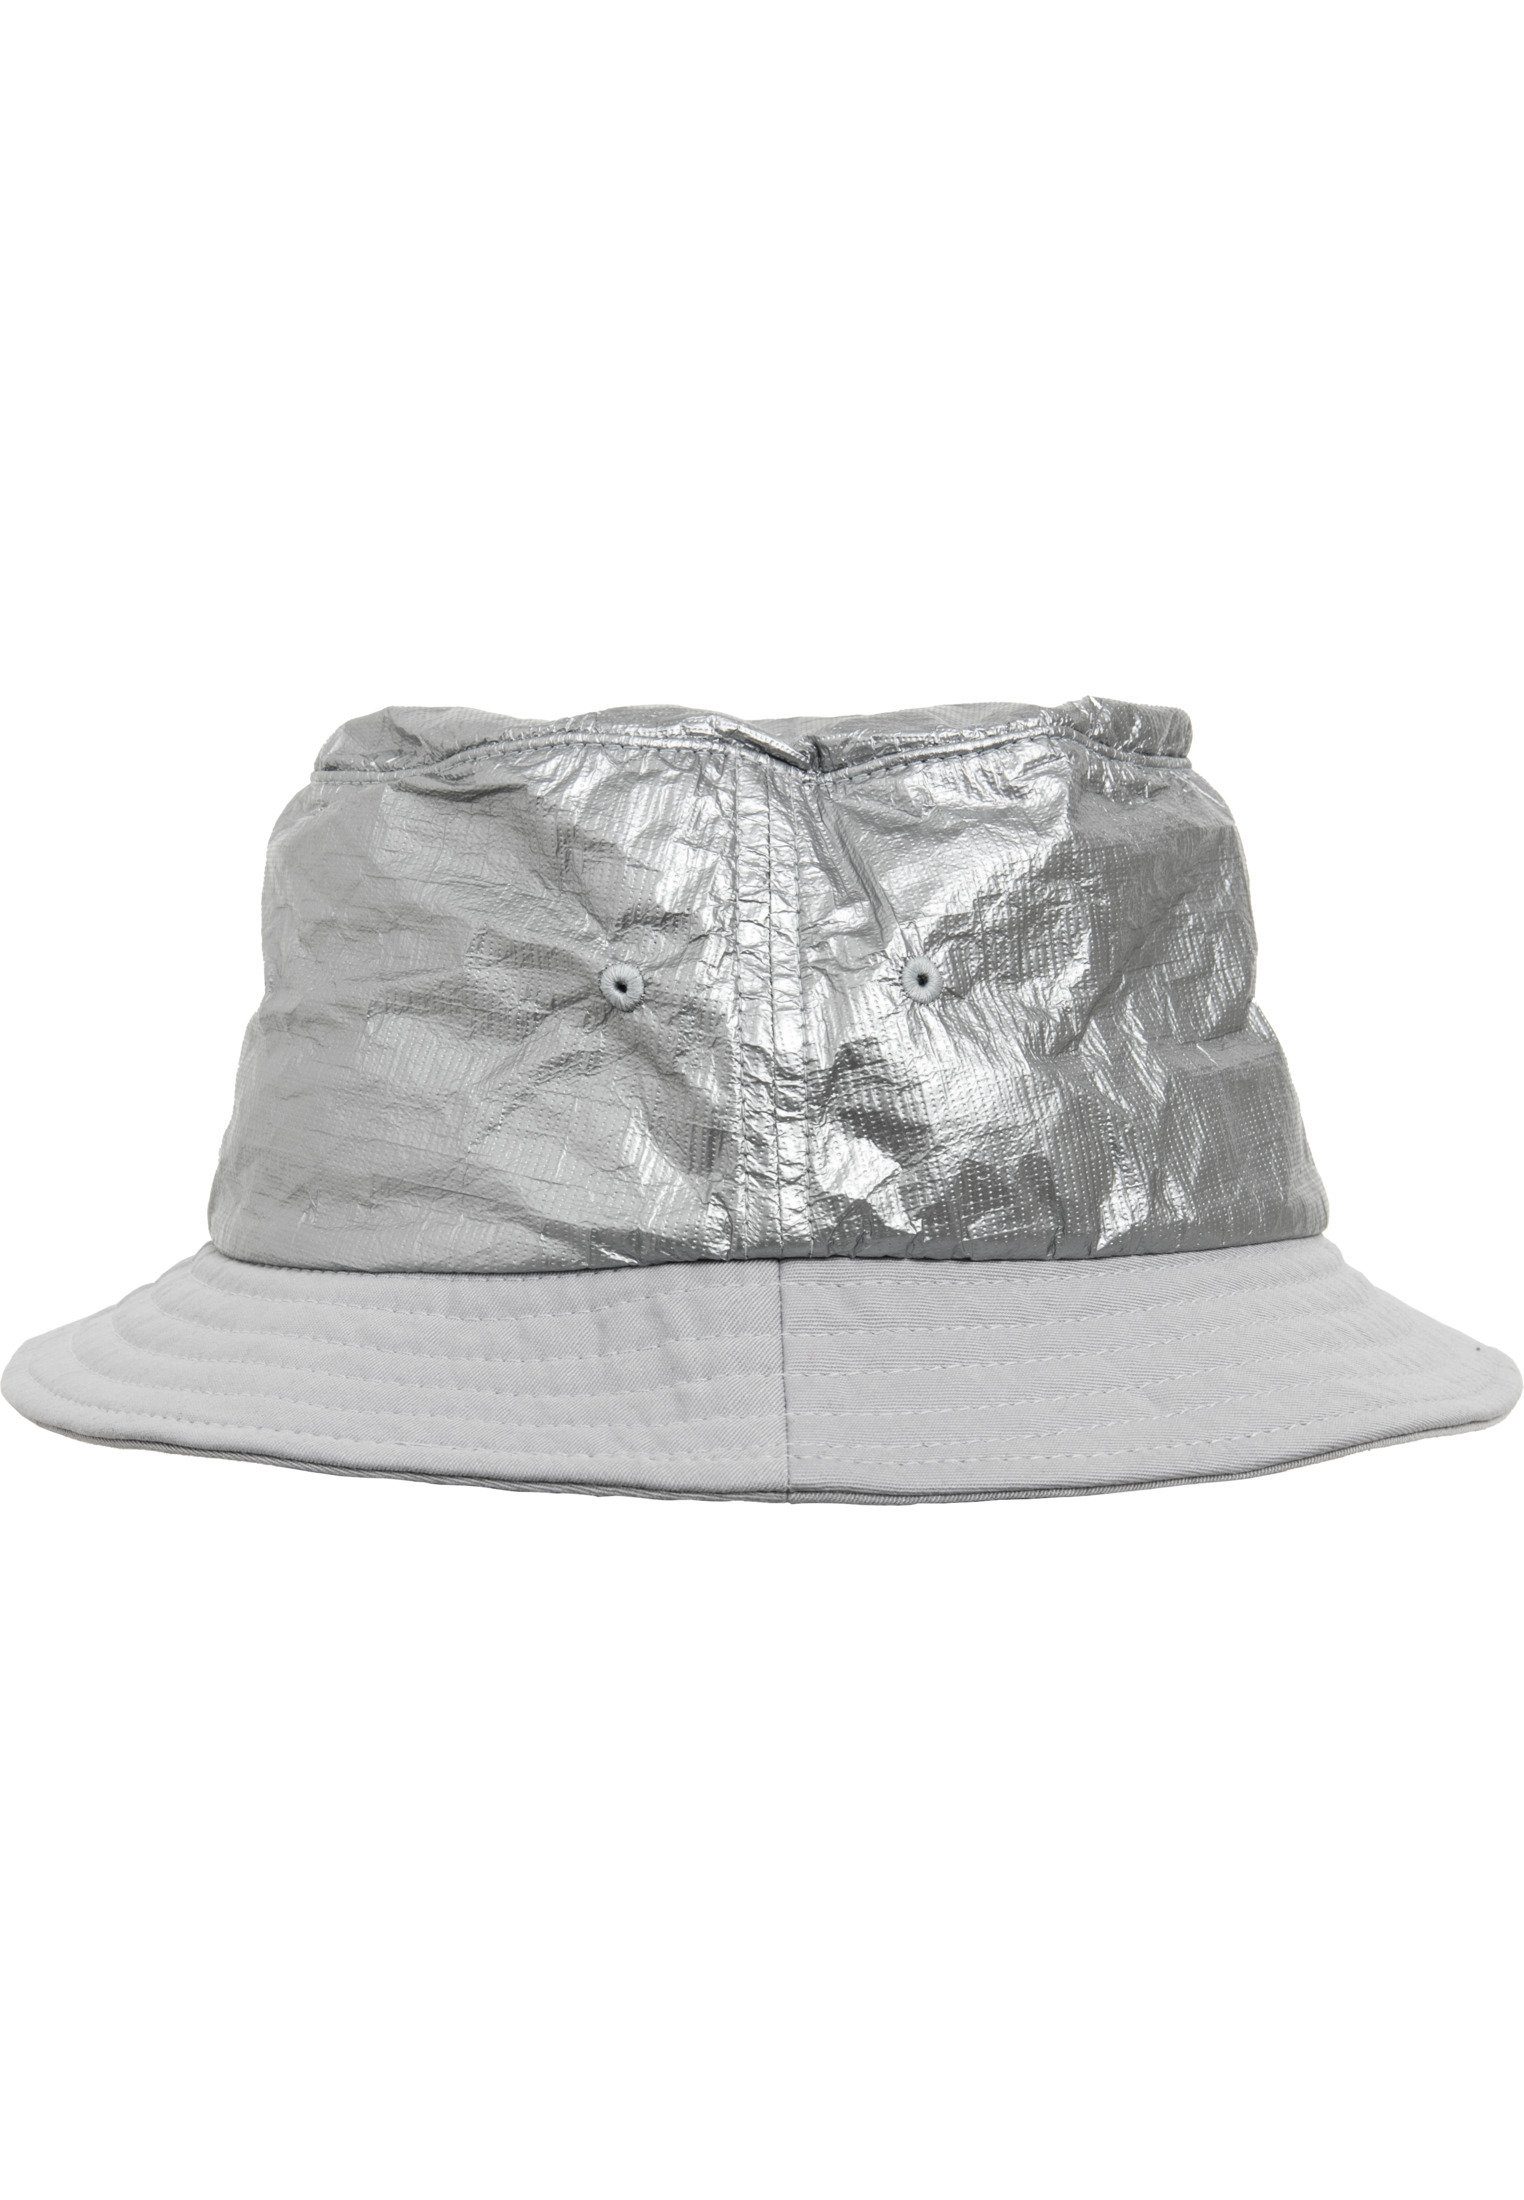 Hat silver Bucket Cap Bucket Crinkled Paper Flex Flexfit Hat